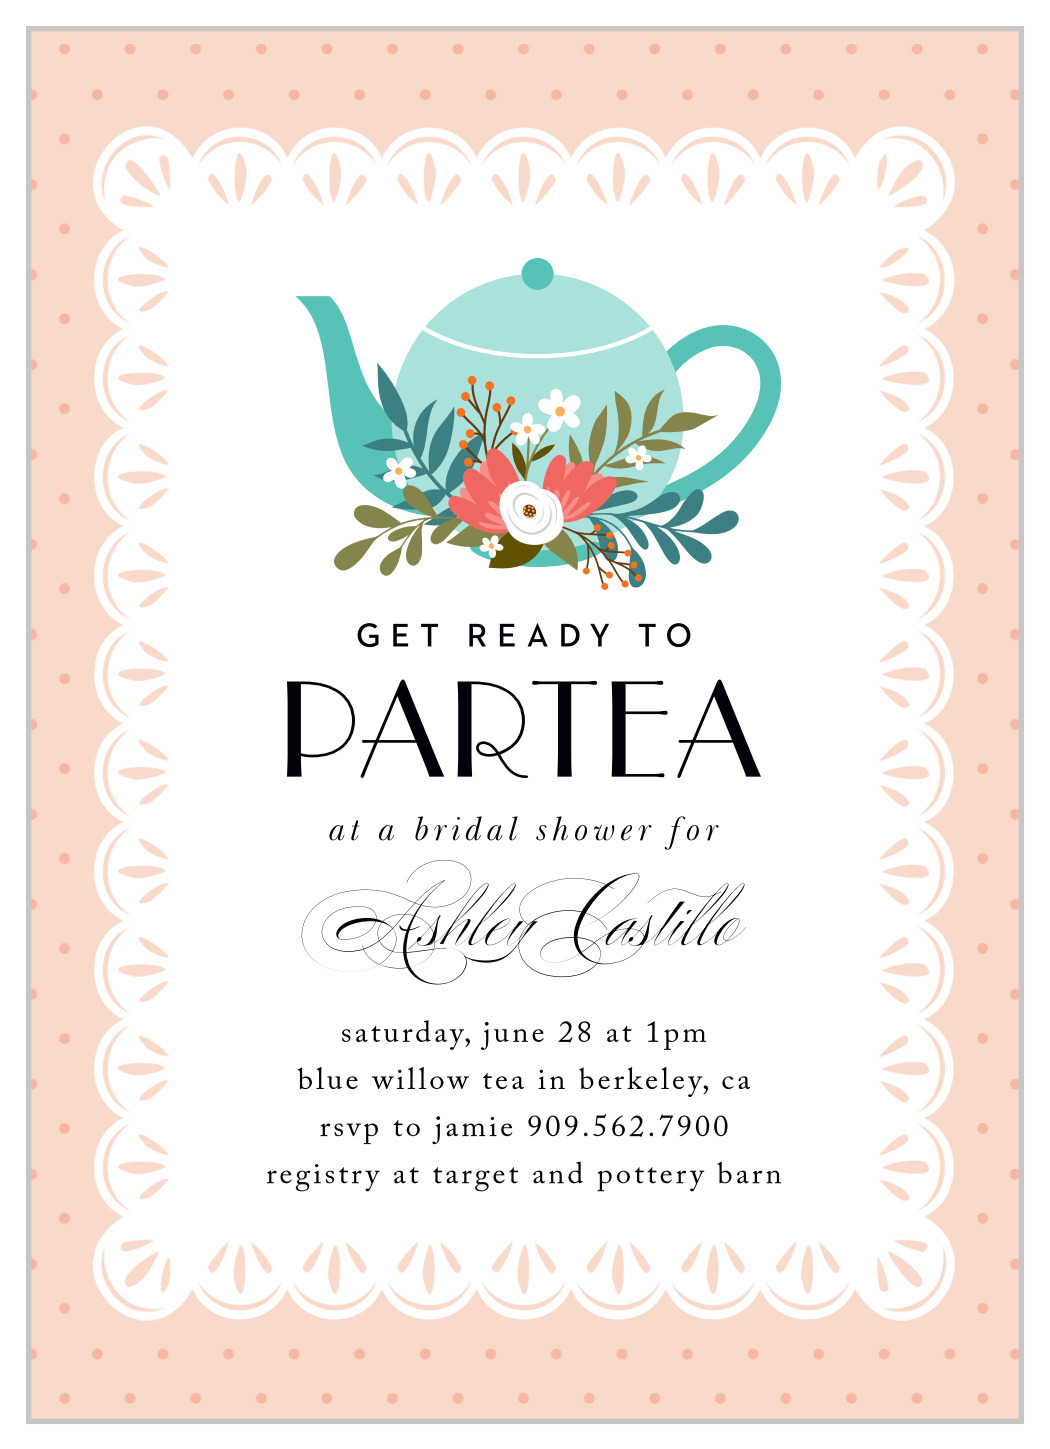 Let's Partea Bridal Shower Invitations